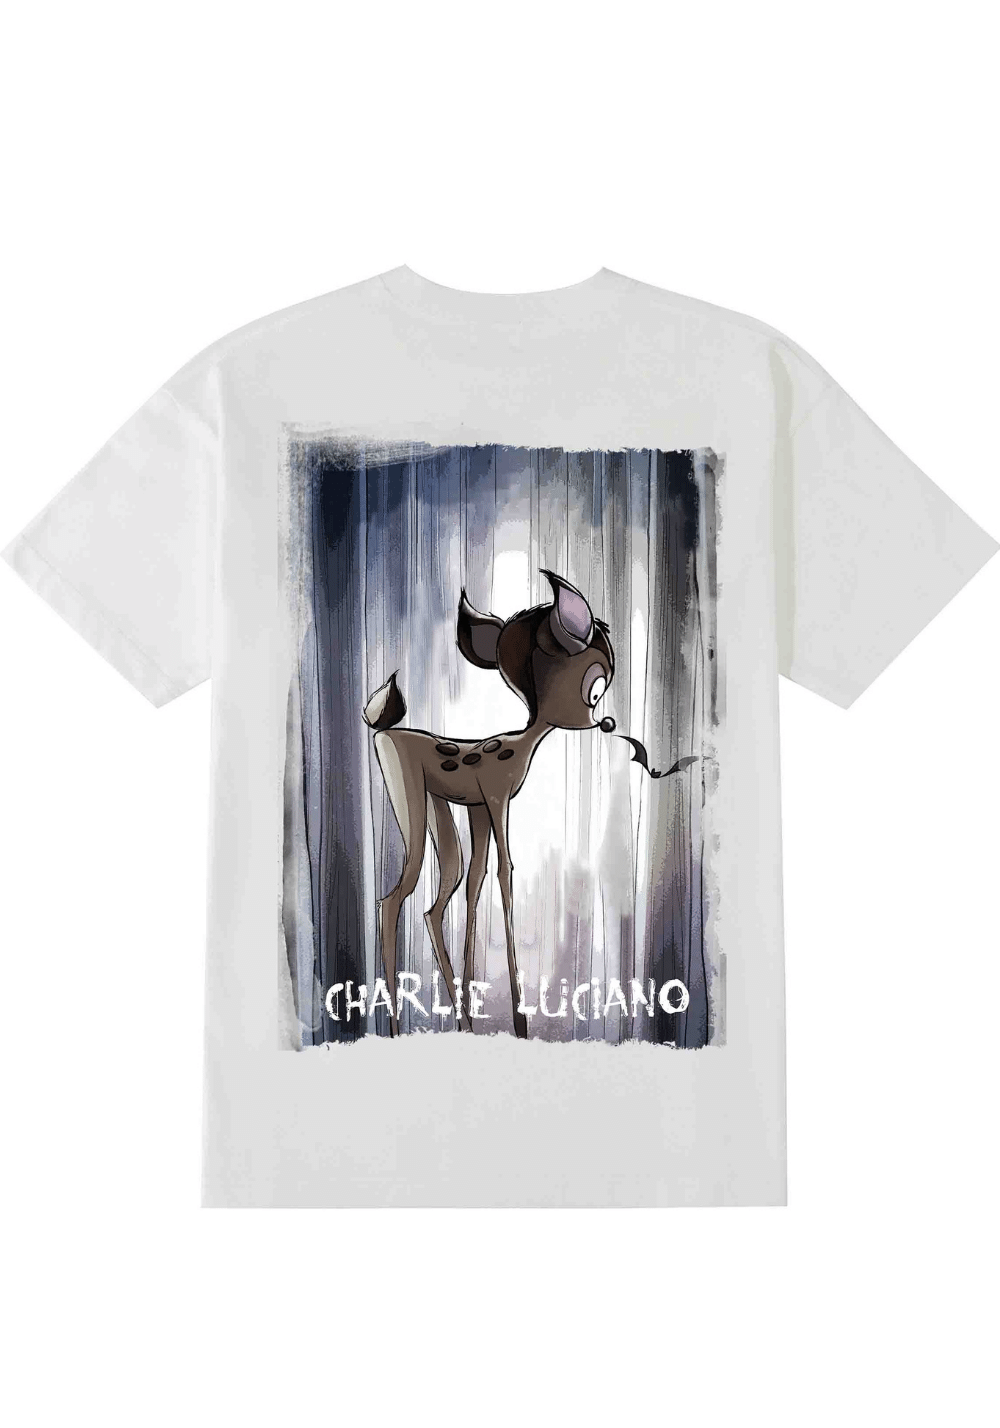 'Bambi' Backside Print T-Shirt - PSYLOS 1, 'Bambi' Backside Print T-Shirt, T-Shirt, Charlie Luciano, PSYLOS 1